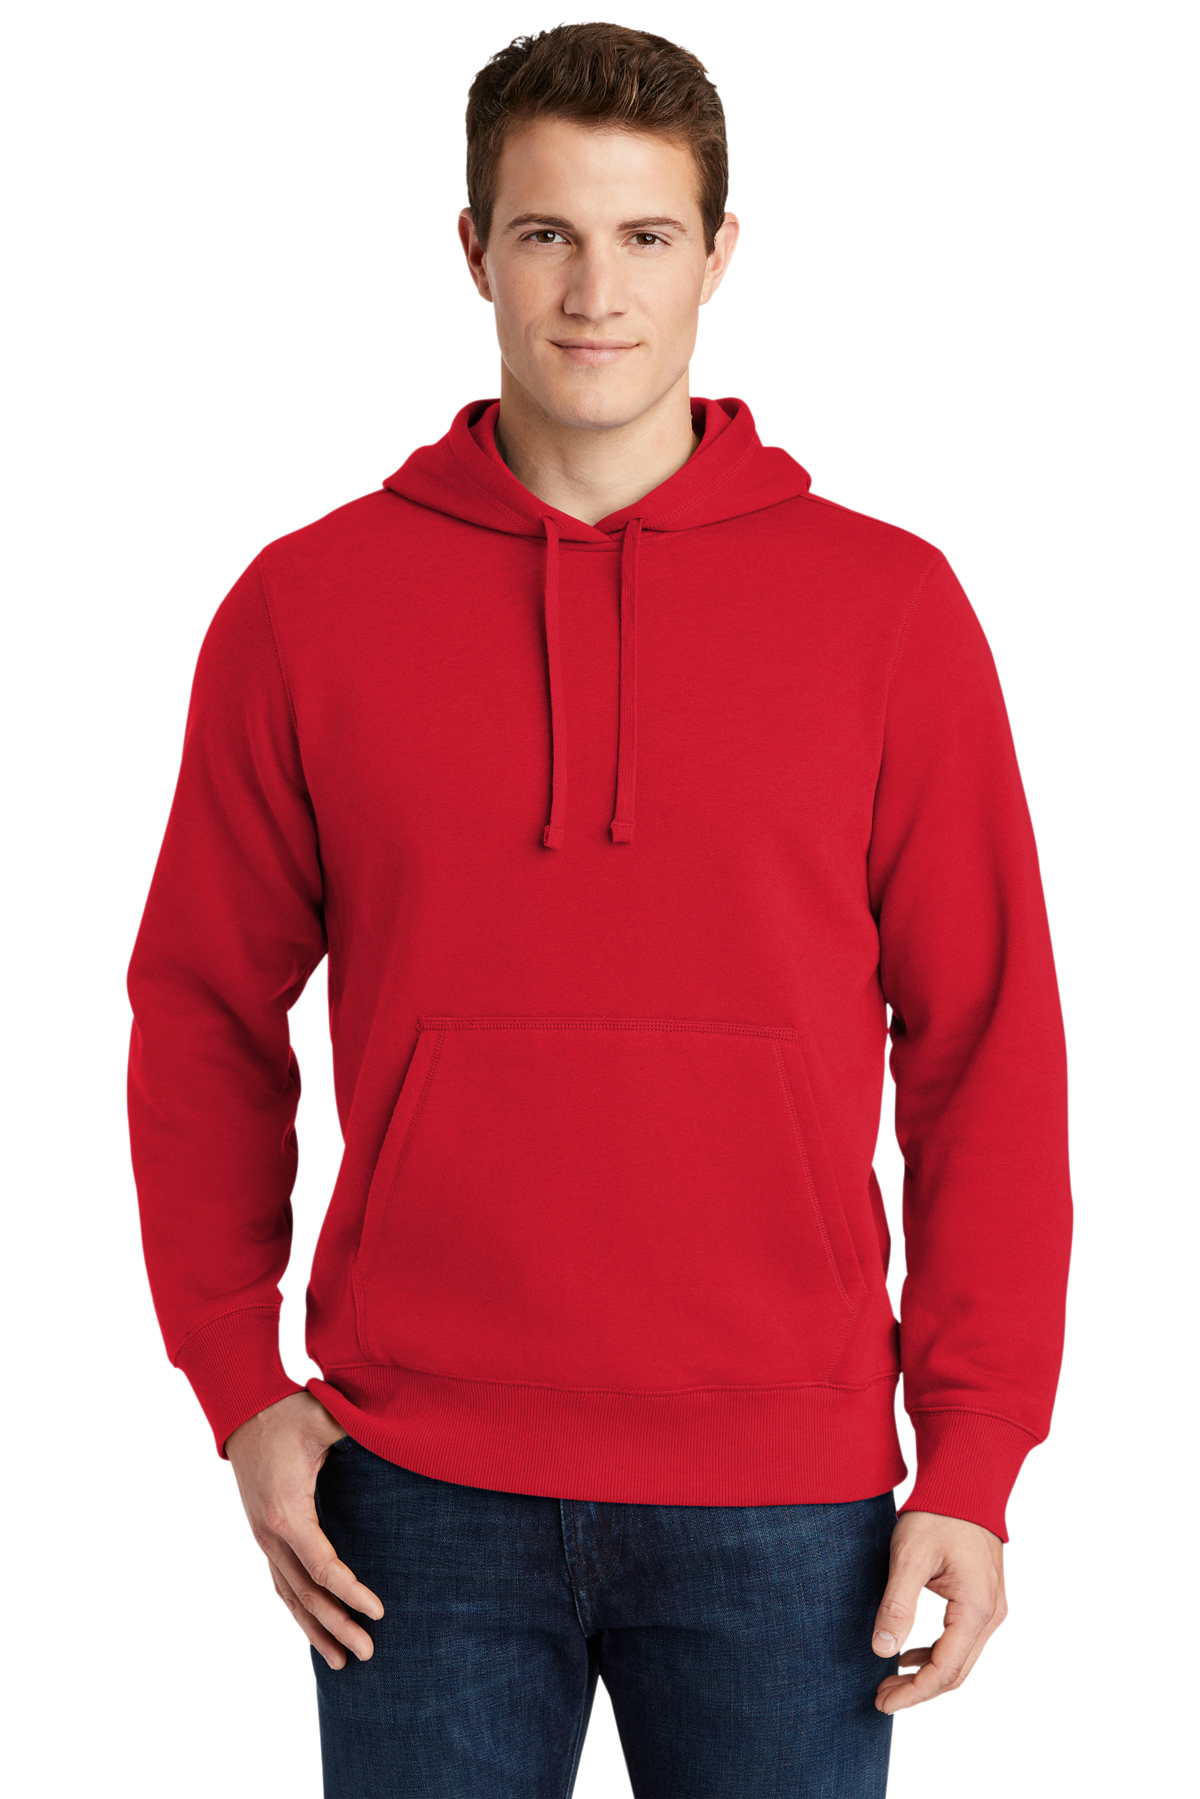 SPORT-TEK Mens Pullover Hooded Sweatshirt